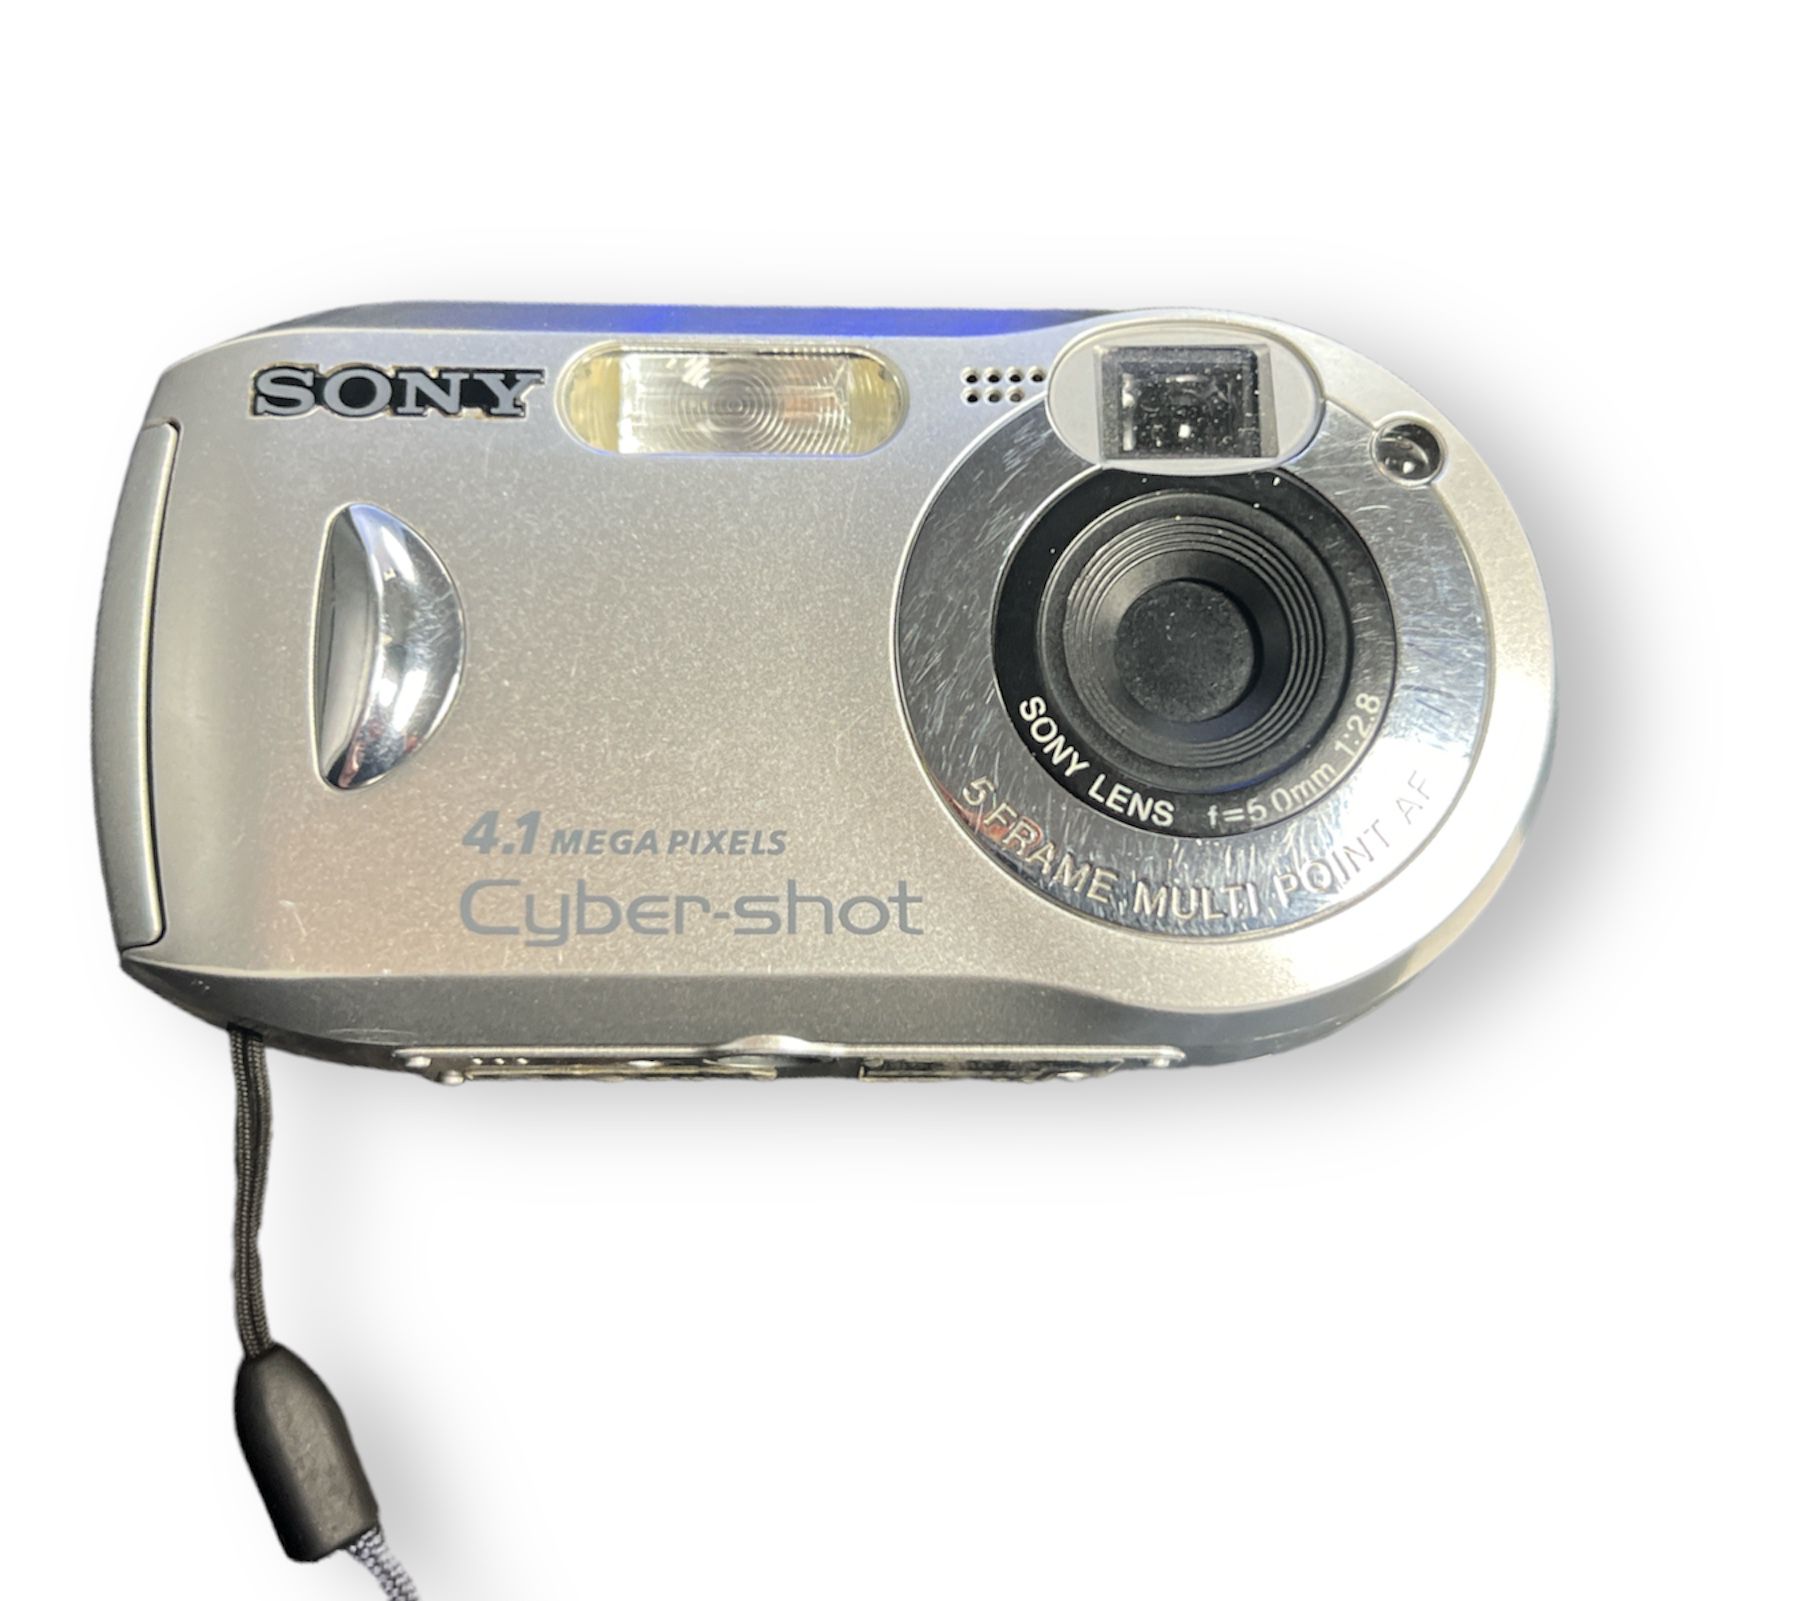 Sony cyber-shot camera dsc-p43